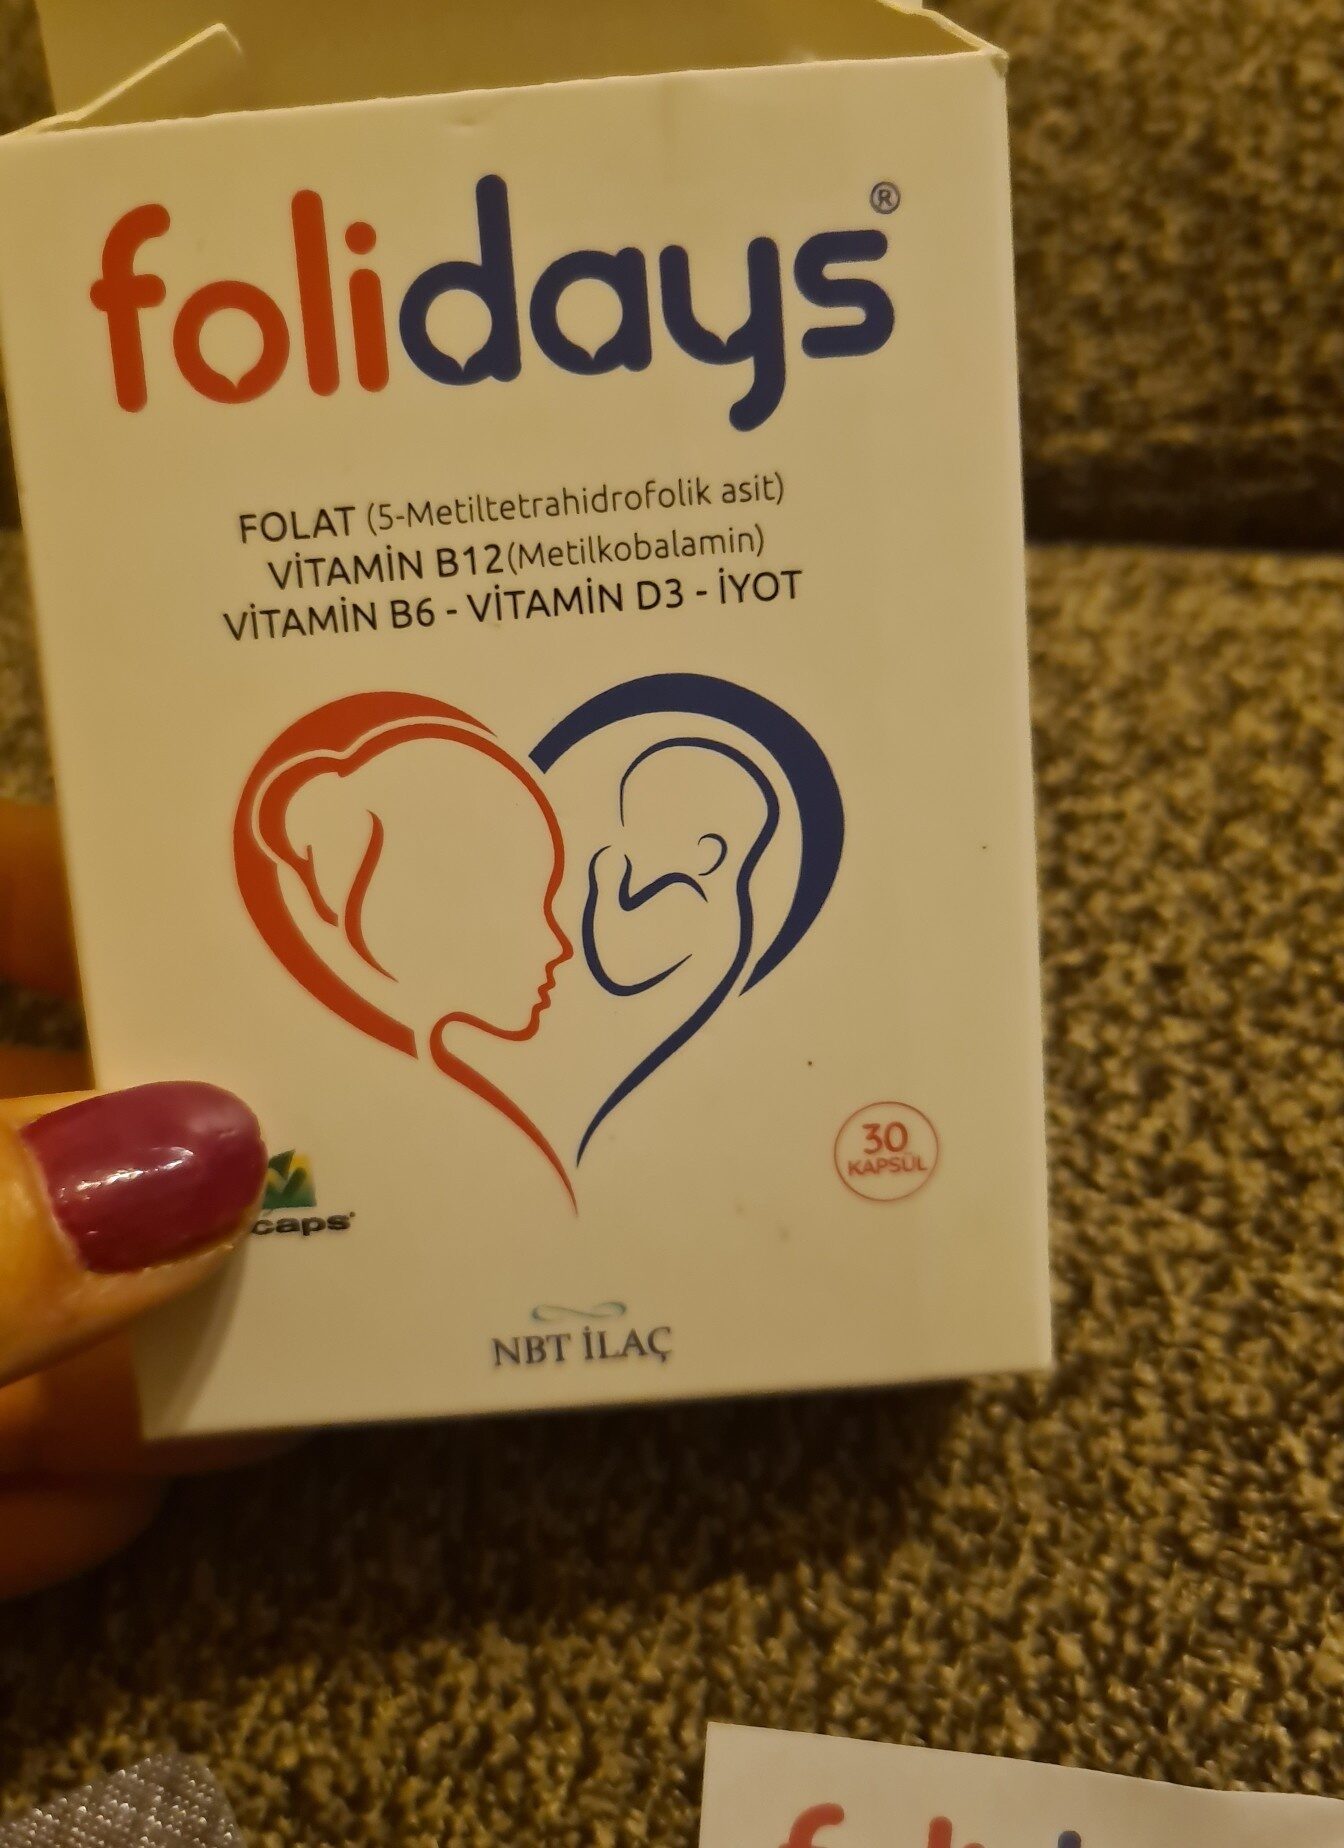 folidays - Ingredients